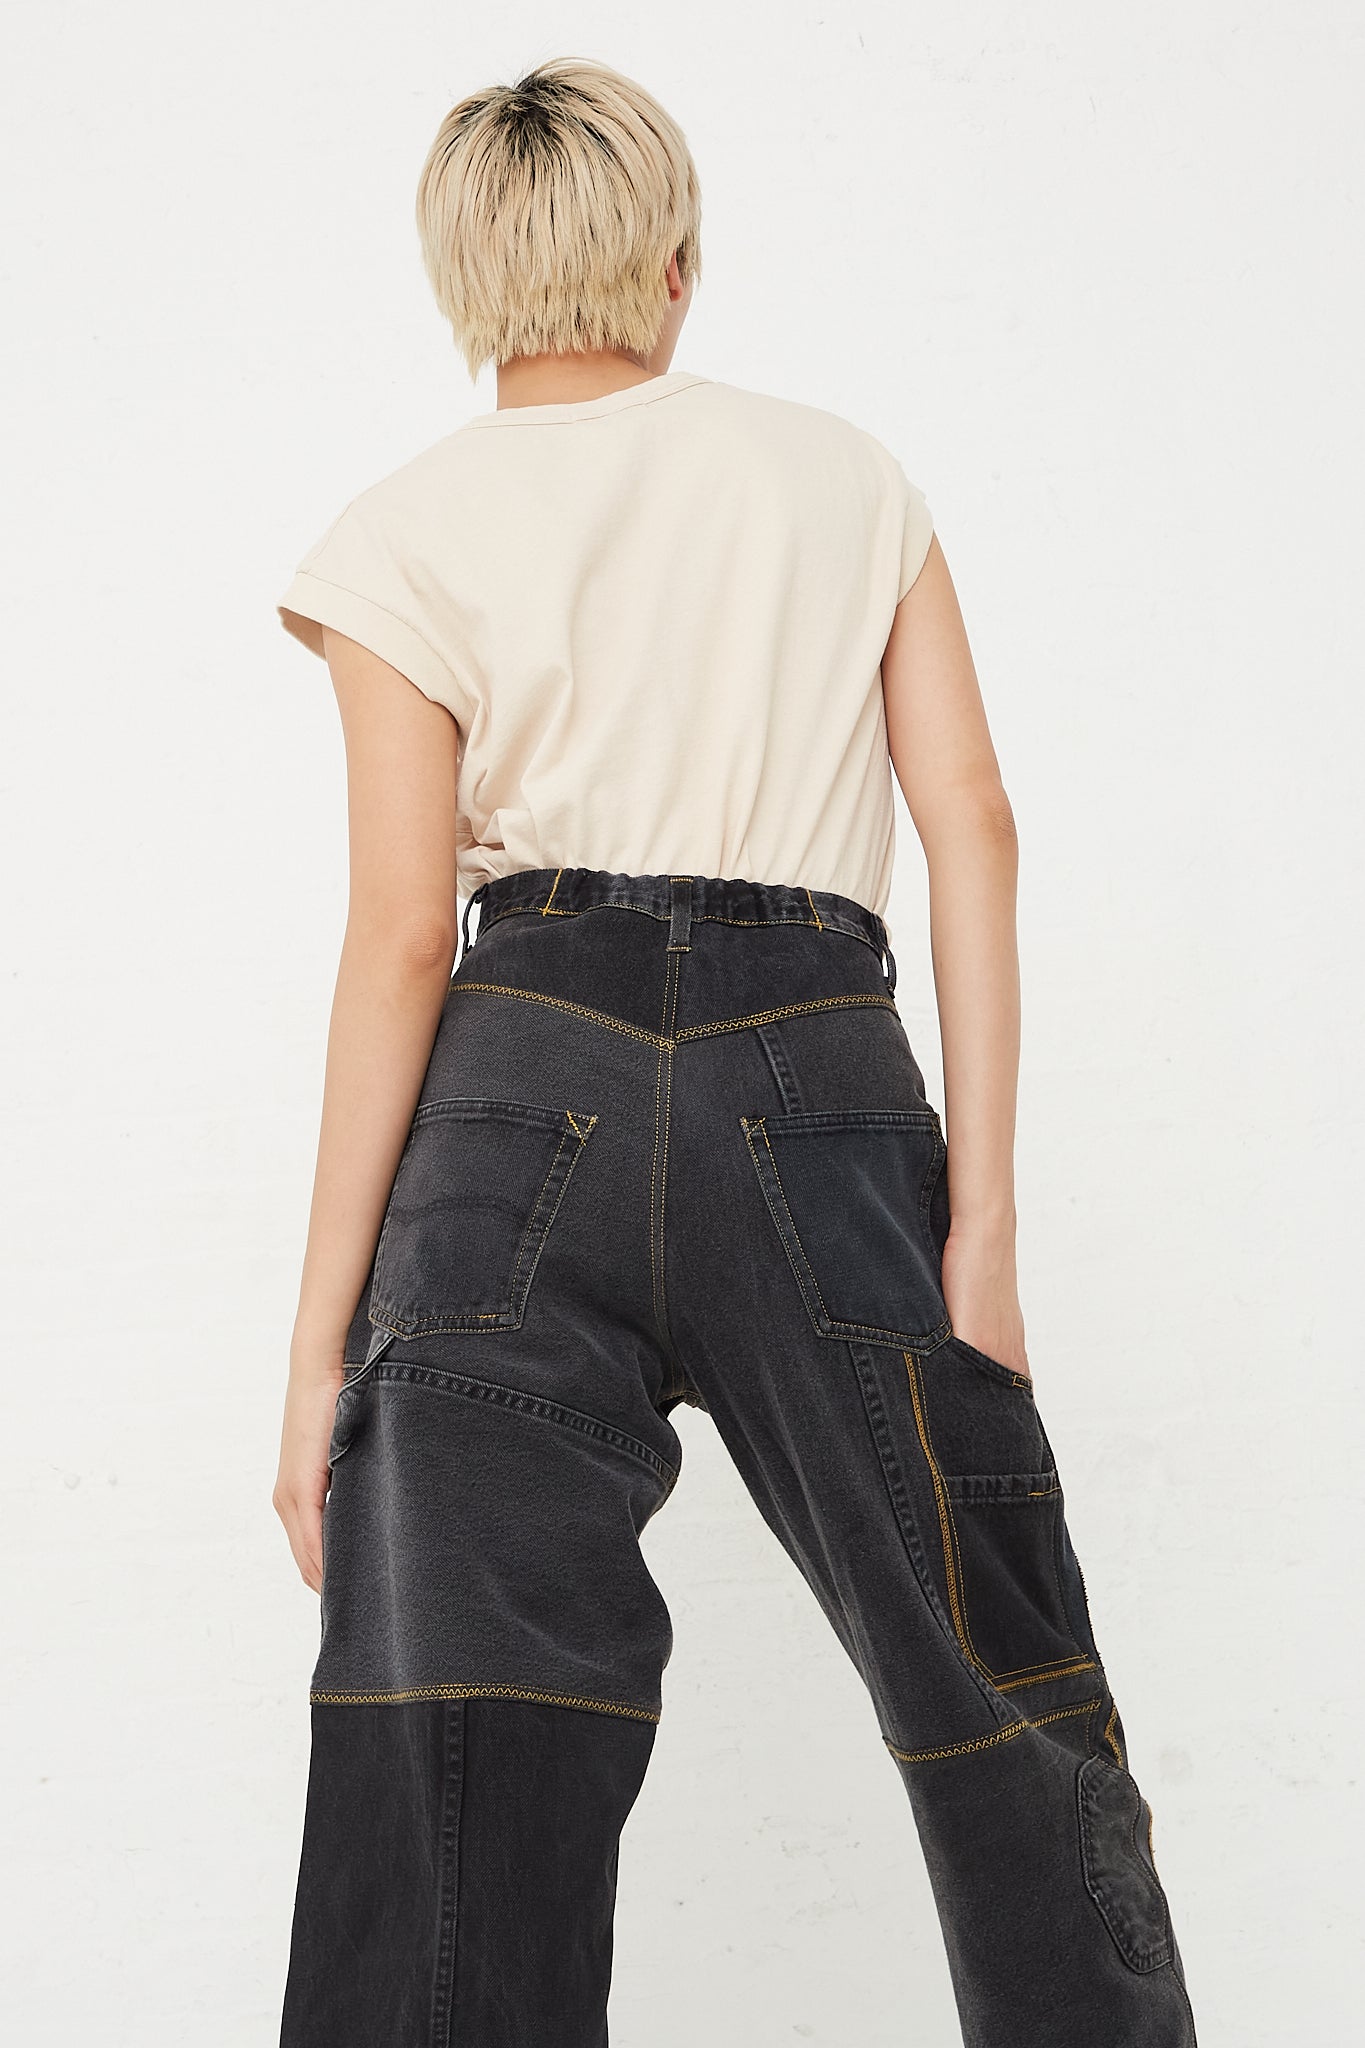  WildRootz - Reworked Jeans in Black Variation B - M back pocket detail